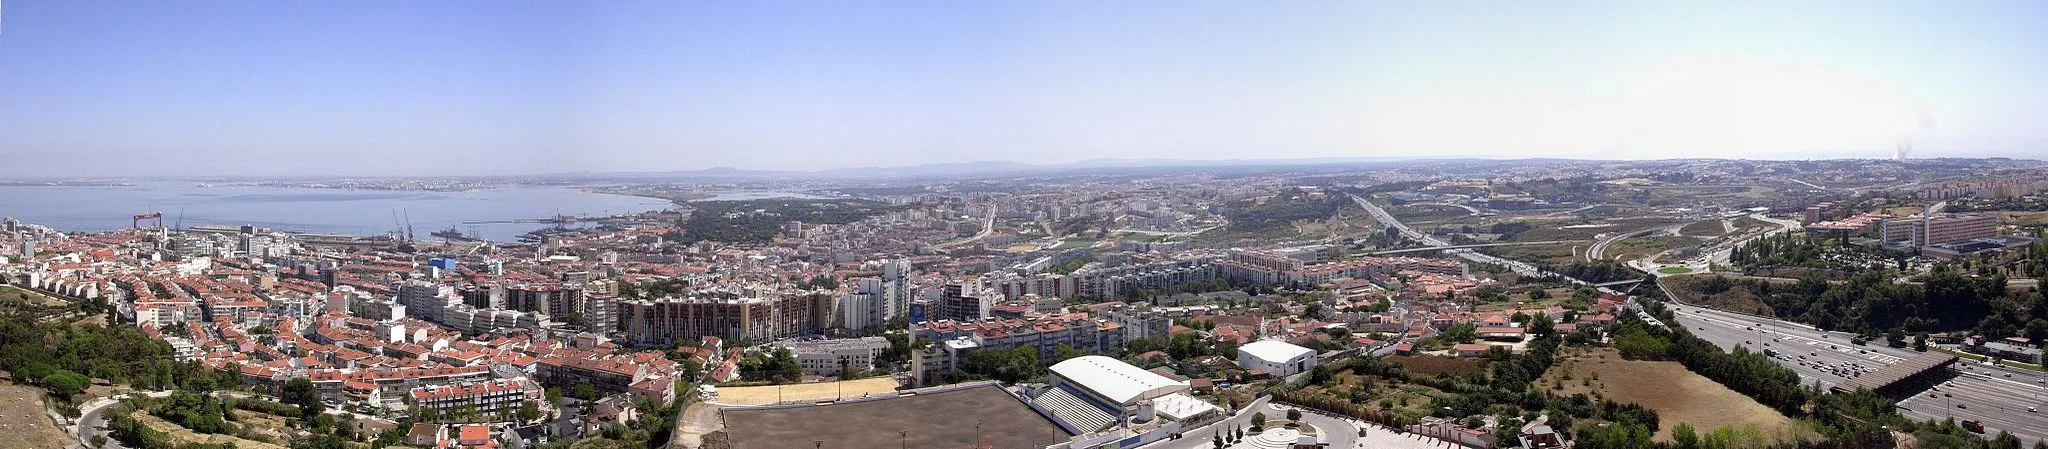 Image de Área Metropolitana de Lisboa